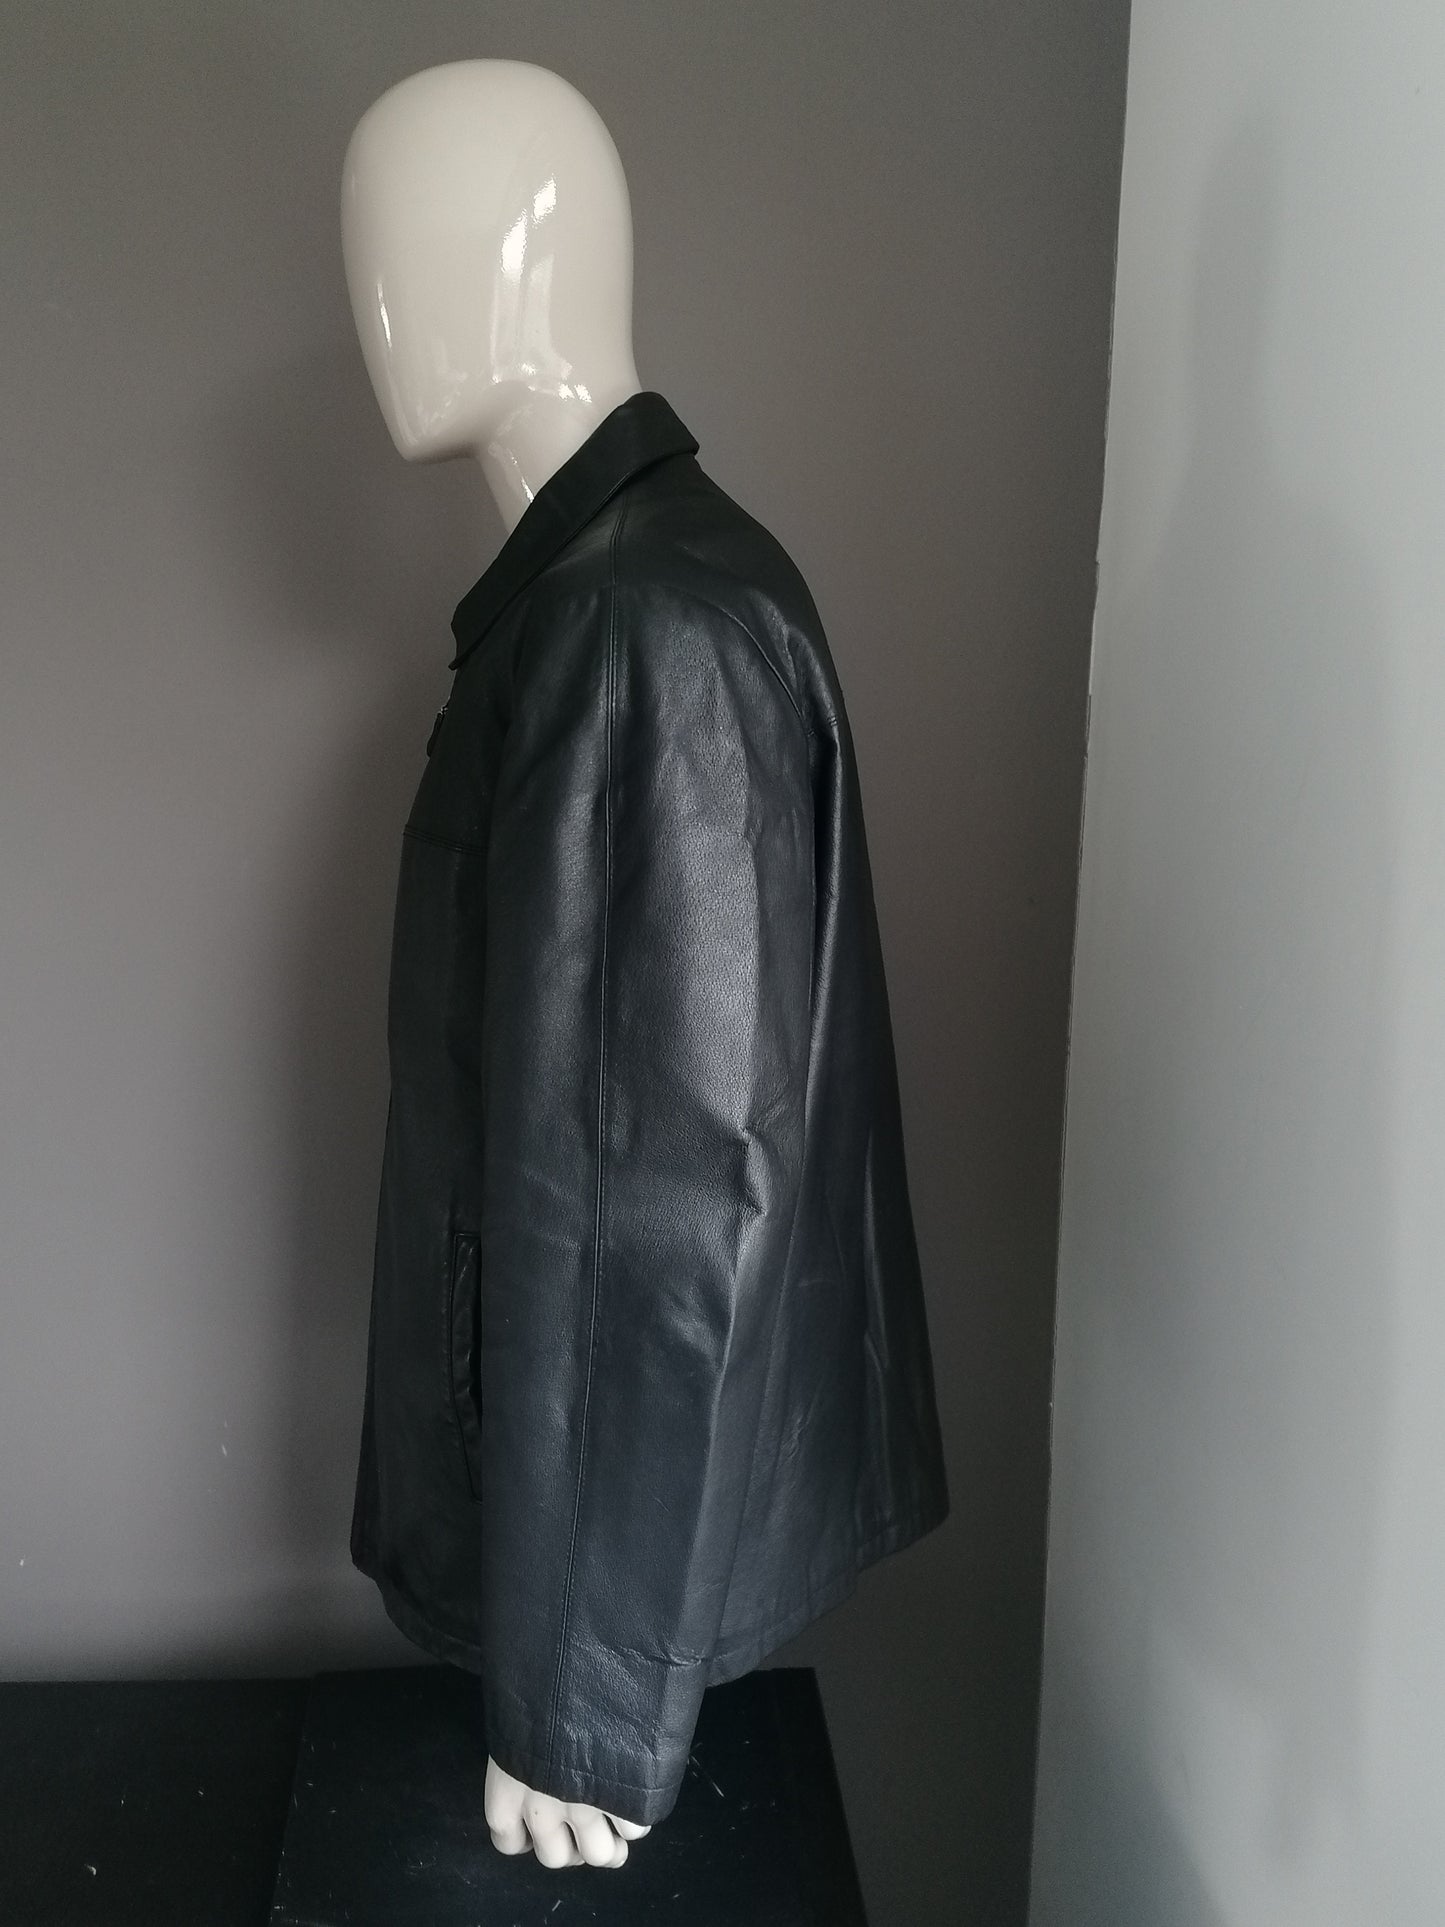 Angelo litrico Chaqueta / chaqueta. Color negro. Tamaño xl.